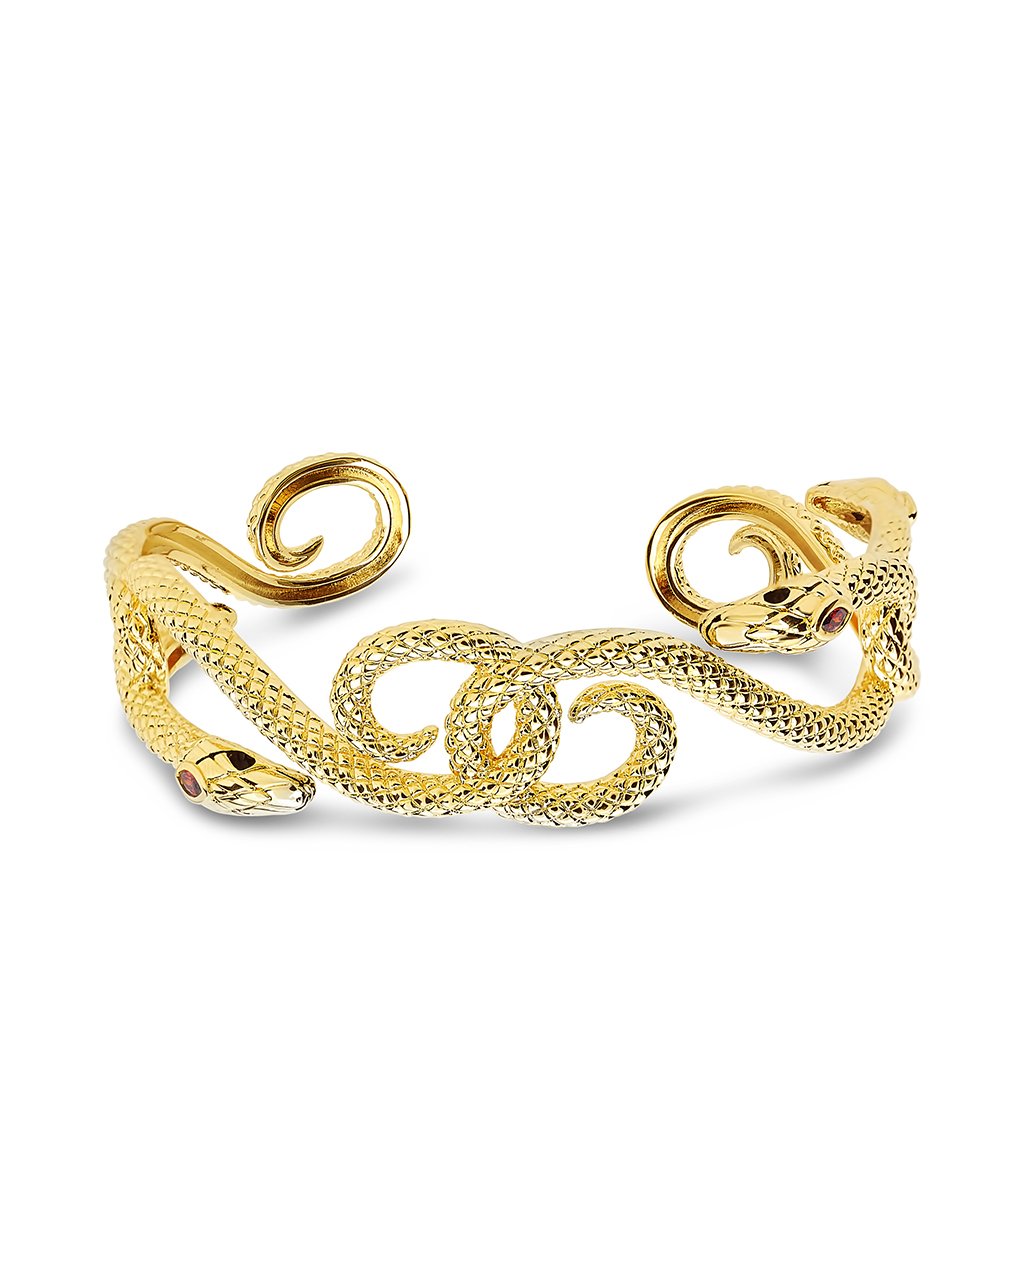 Interlocking Snake Cuff Bracelet Sterling Forever Gold